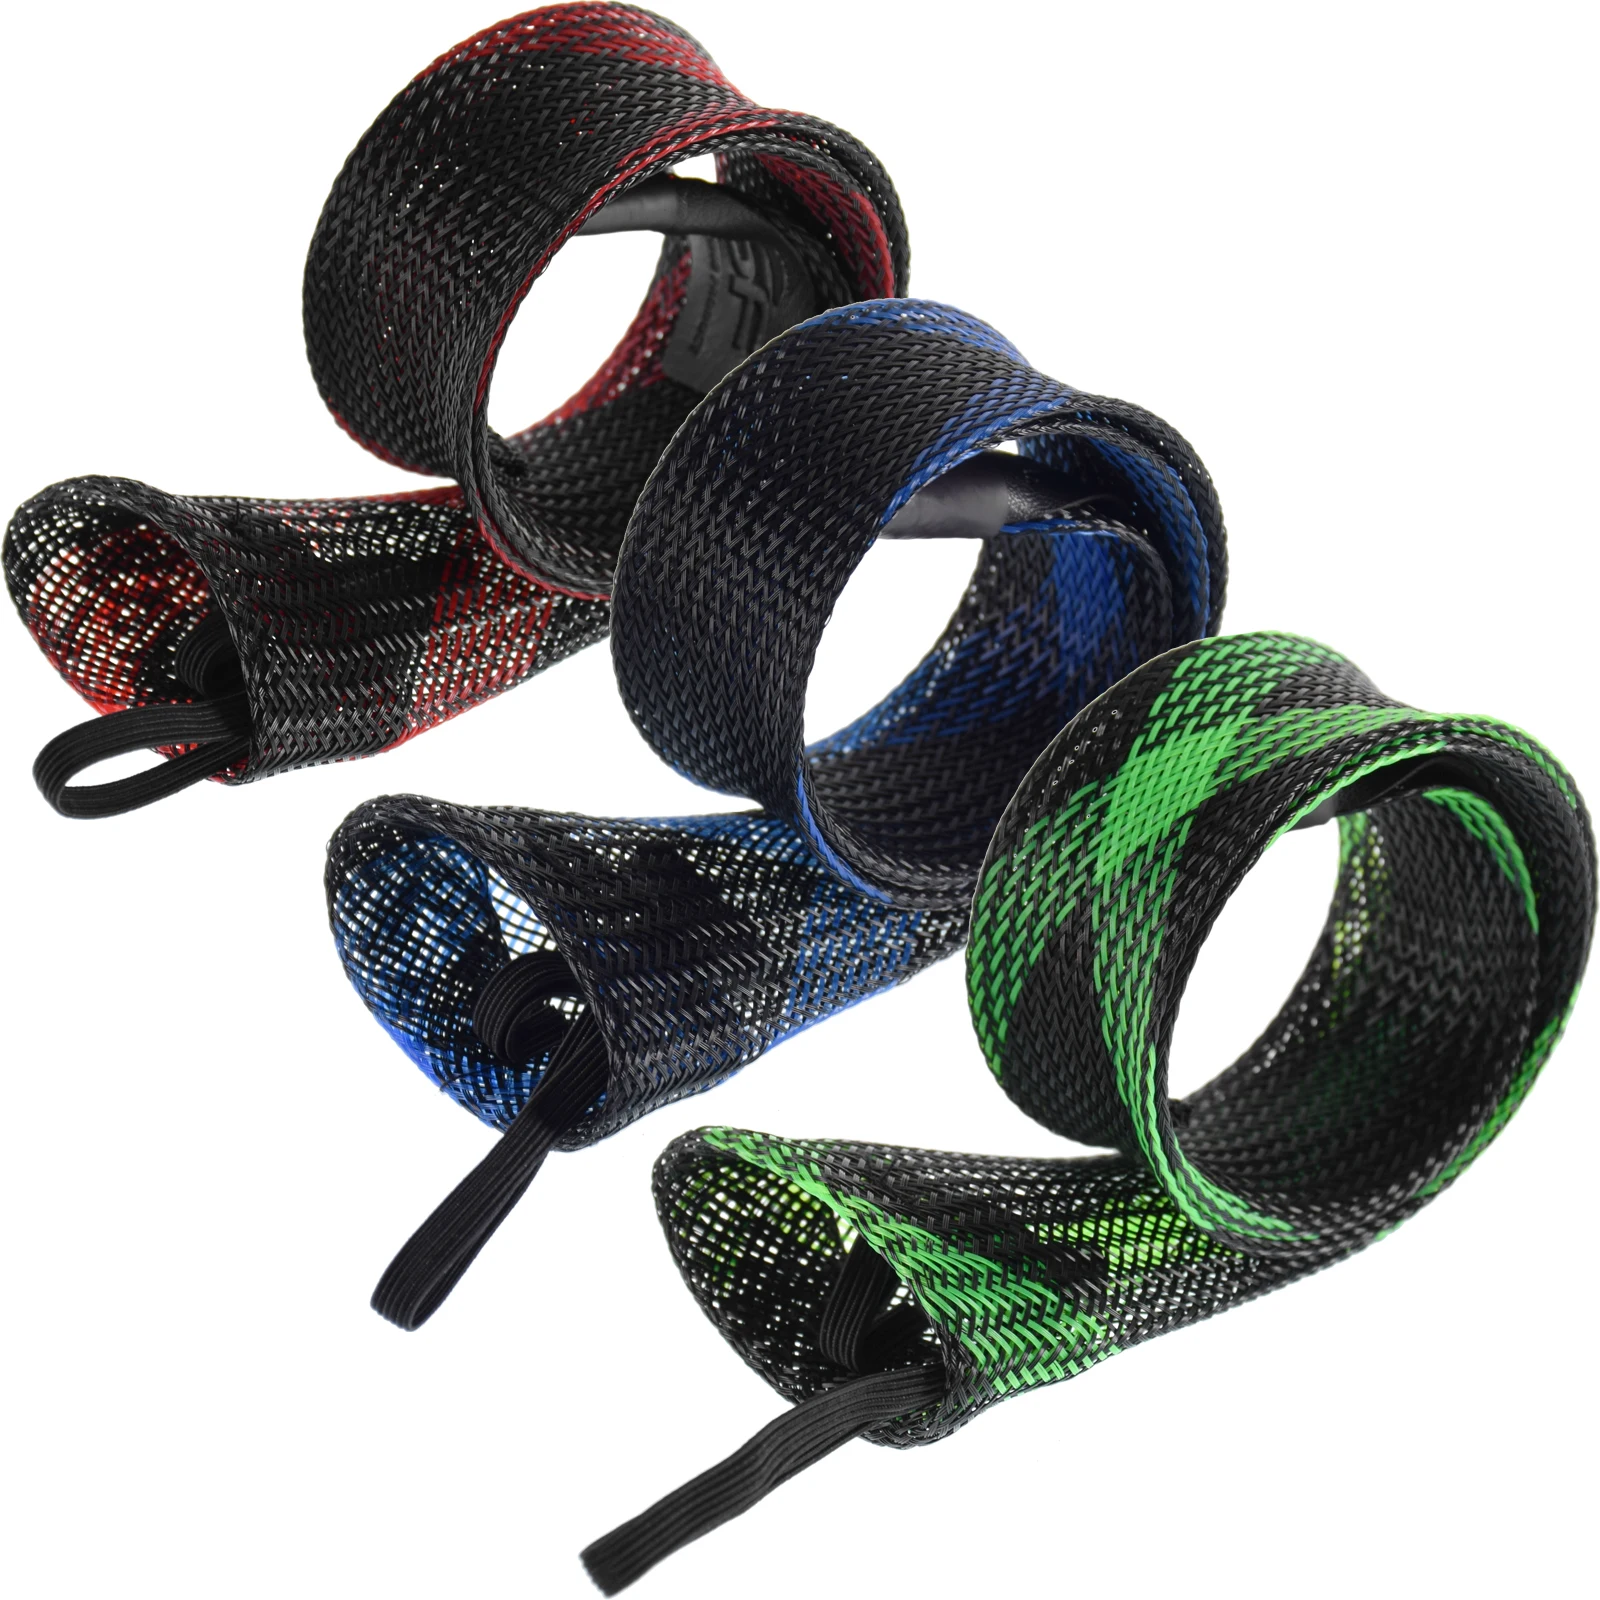 https://ae01.alicdn.com/kf/H5fea93c816e6488dbd812fce145a06afZ/SF-3PCS-6PCS-56cm-Ice-Fishing-Rod-Cover-Sock-Sleeve-With-Elastic-Band-Hanging-Ring.jpg